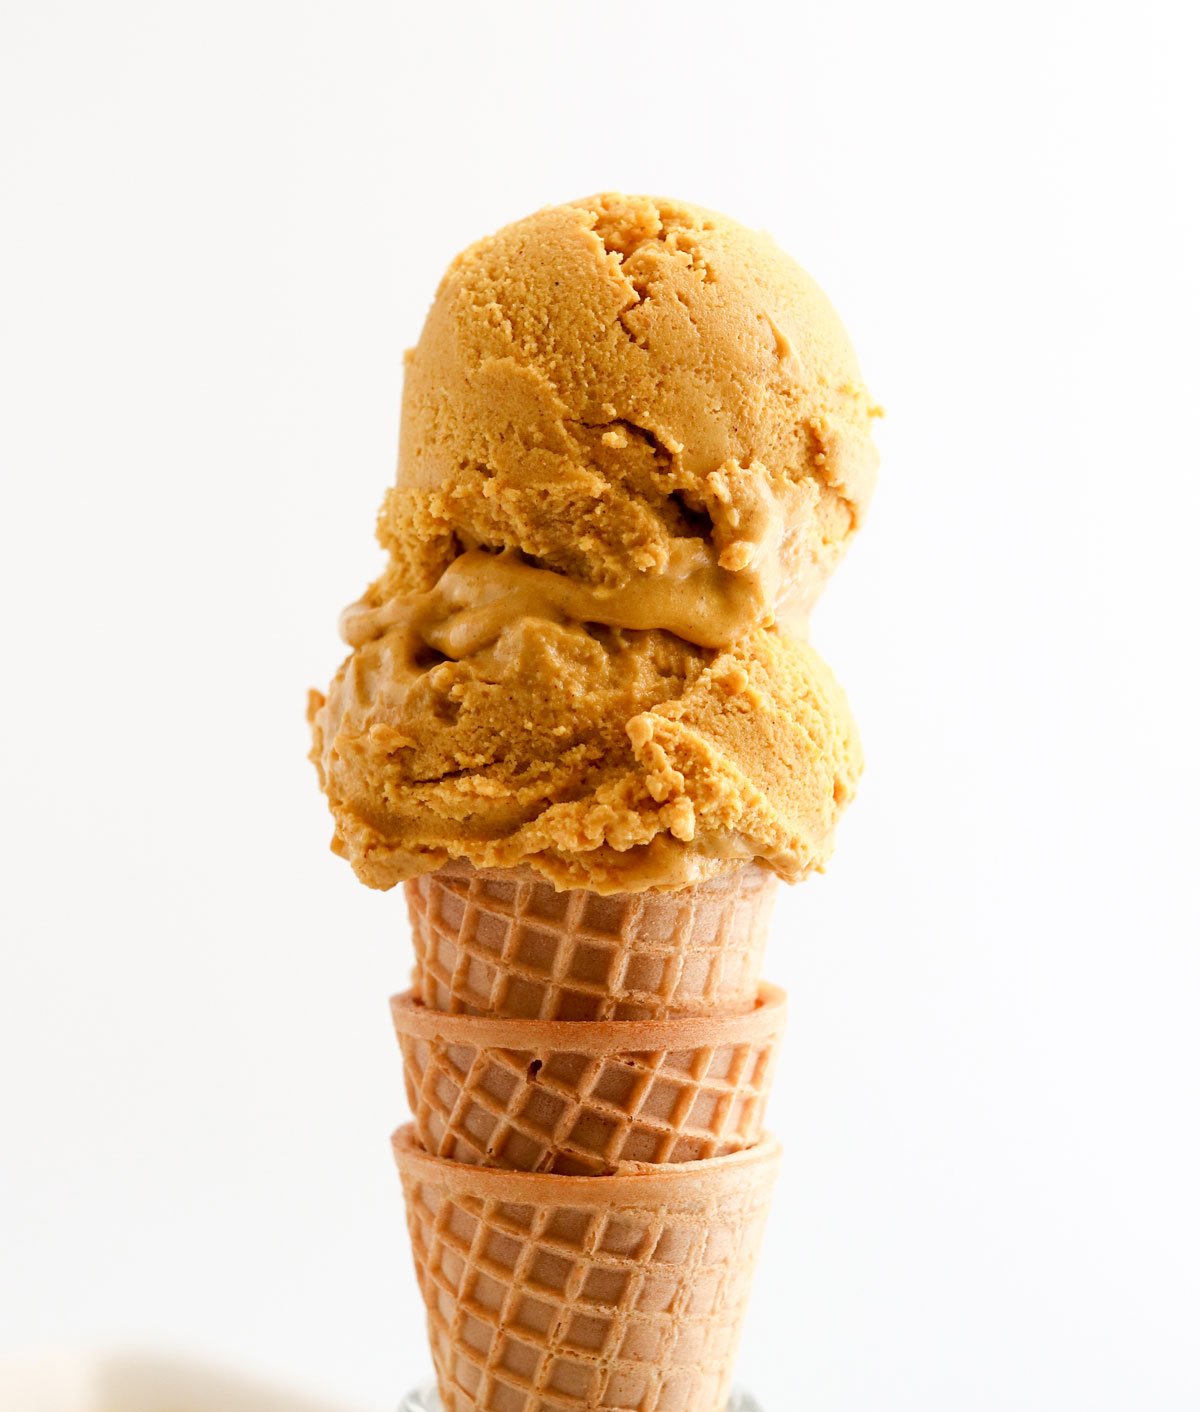 pumpkin ice cream scoops on cone